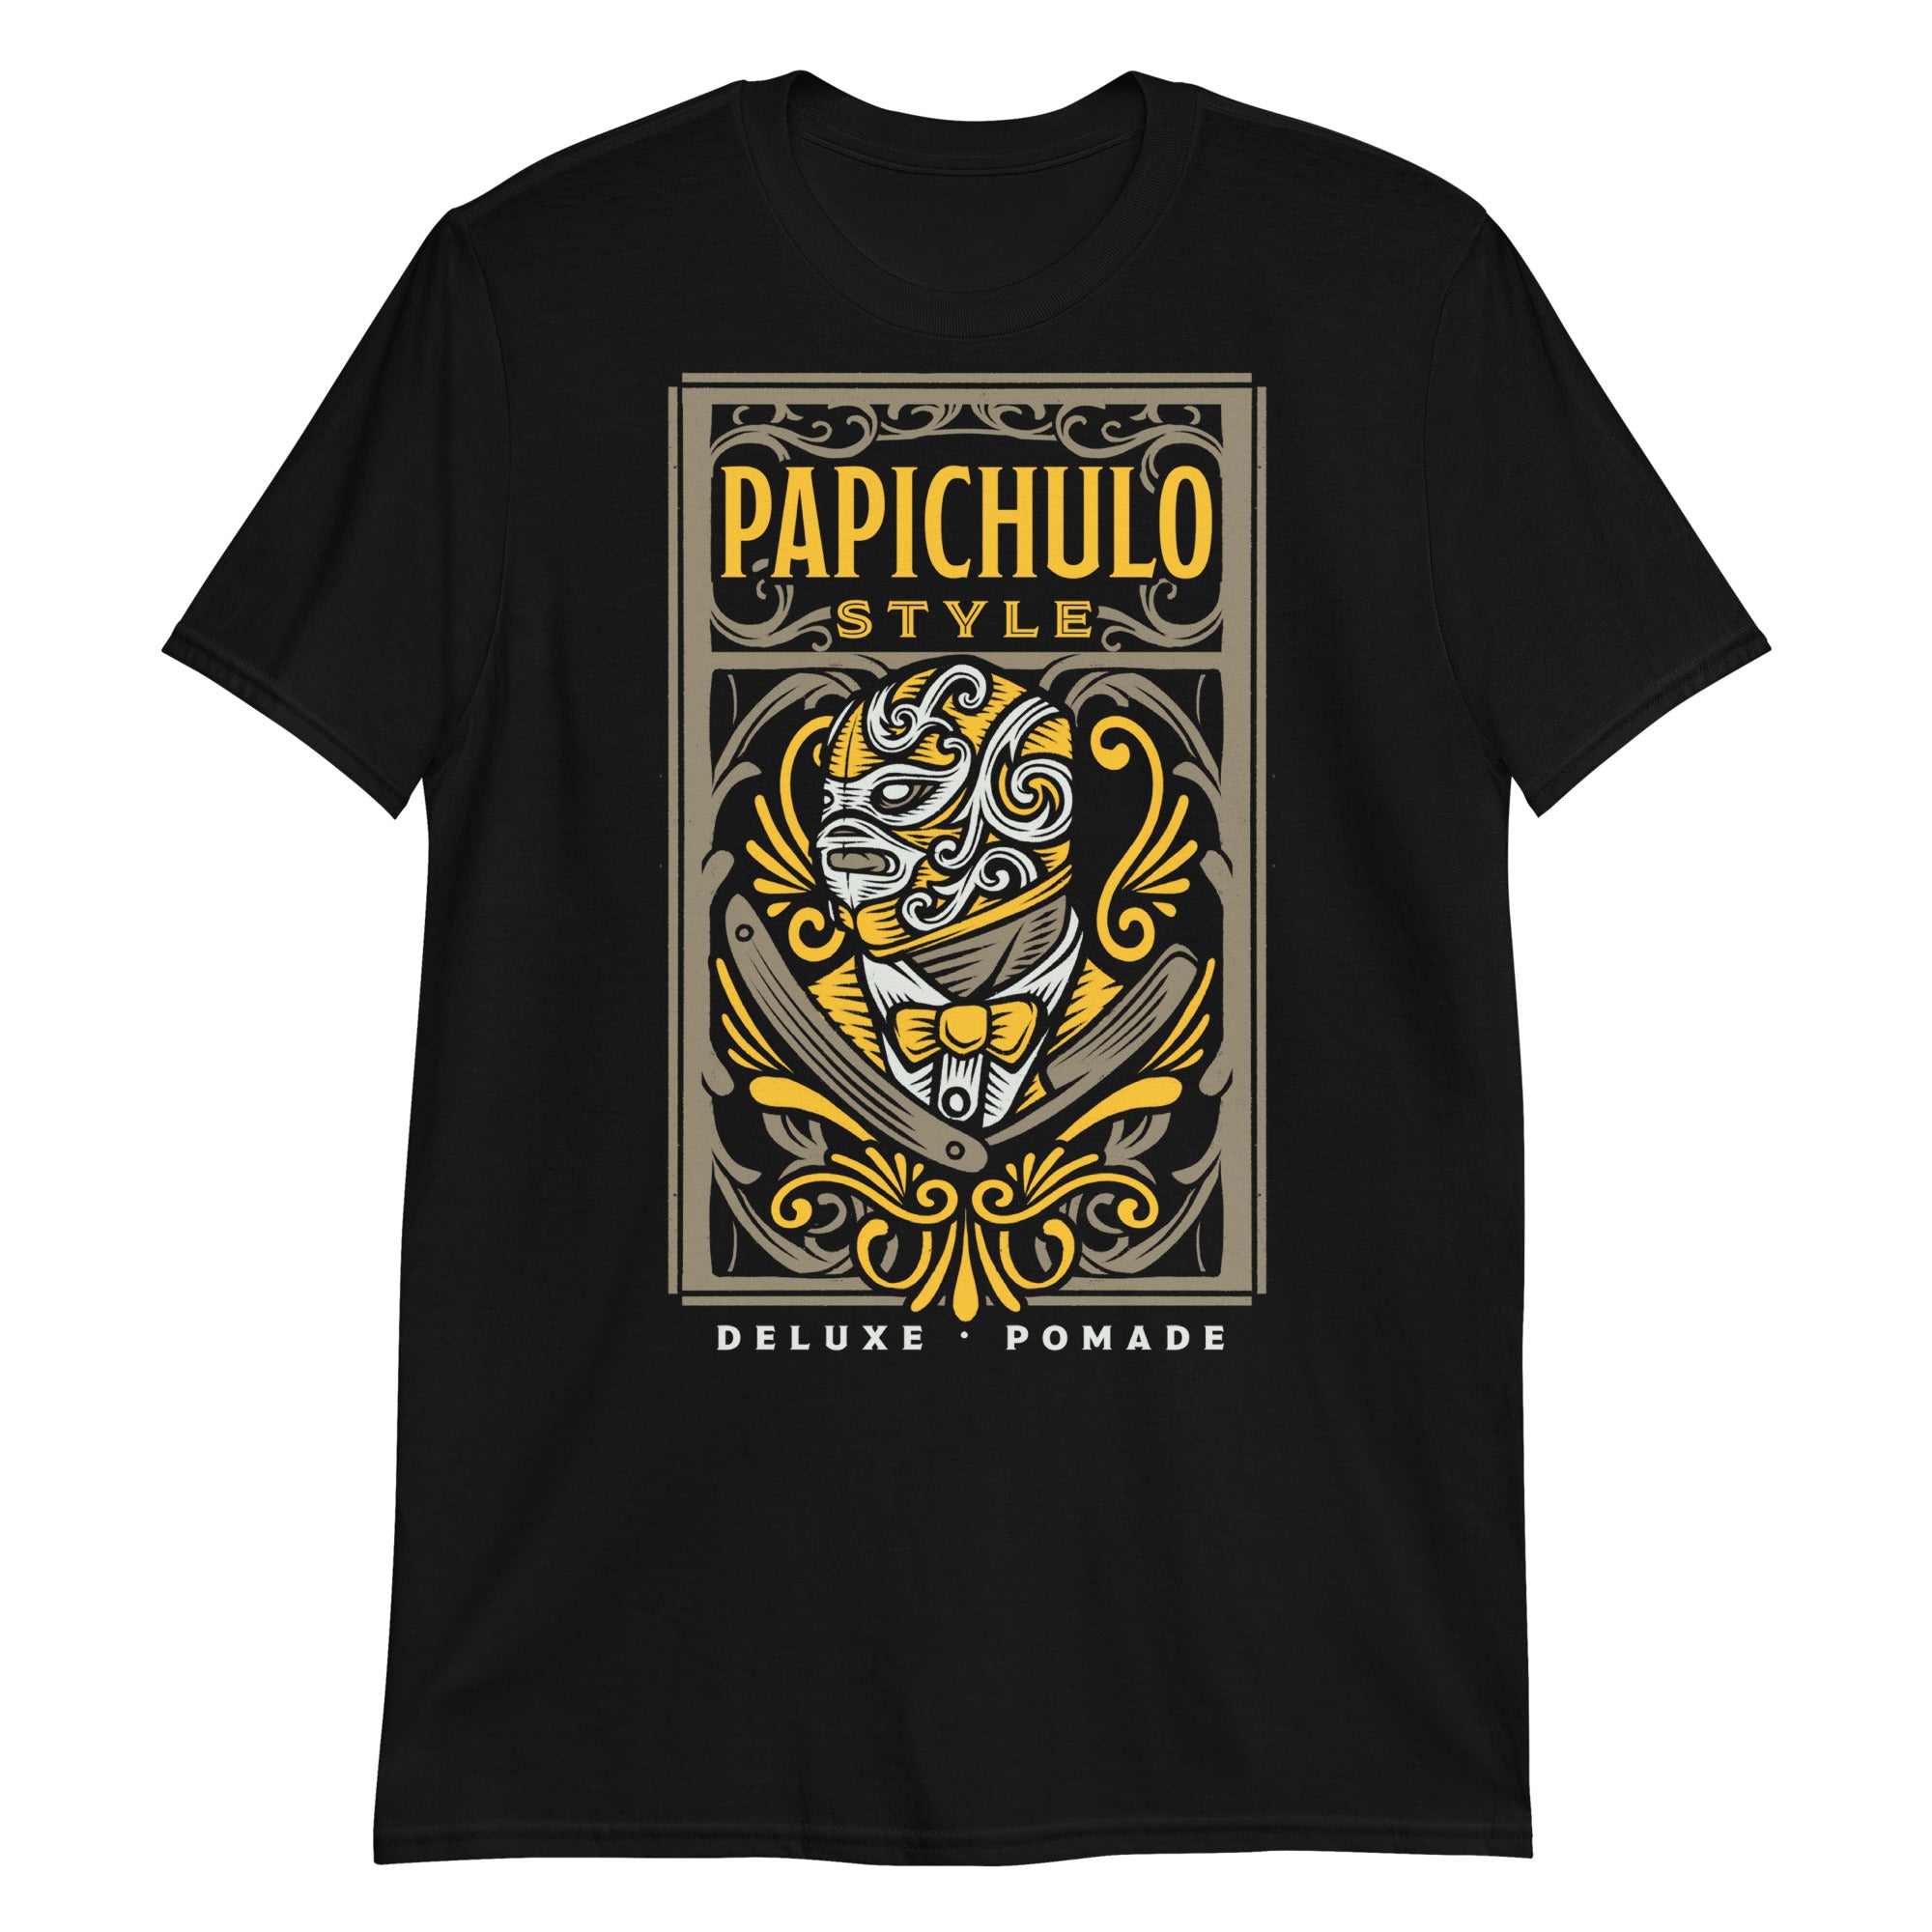 T-Shirt Design 4 By Nacho Santana - Papichulo Style